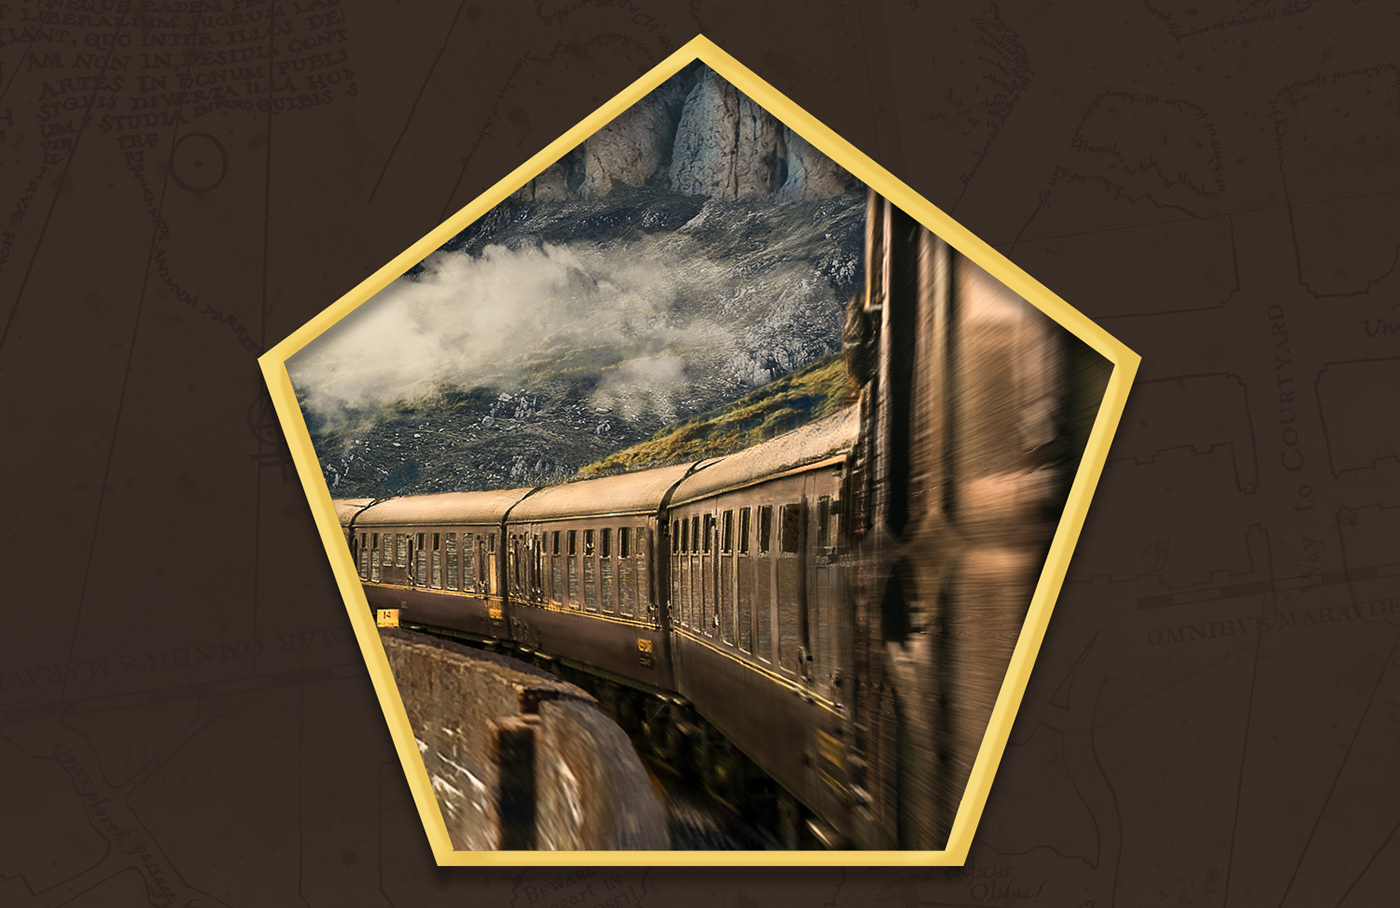 harry potter manipulation Matte Painting train mountain car Castle Hogwarts fantasy Landscape